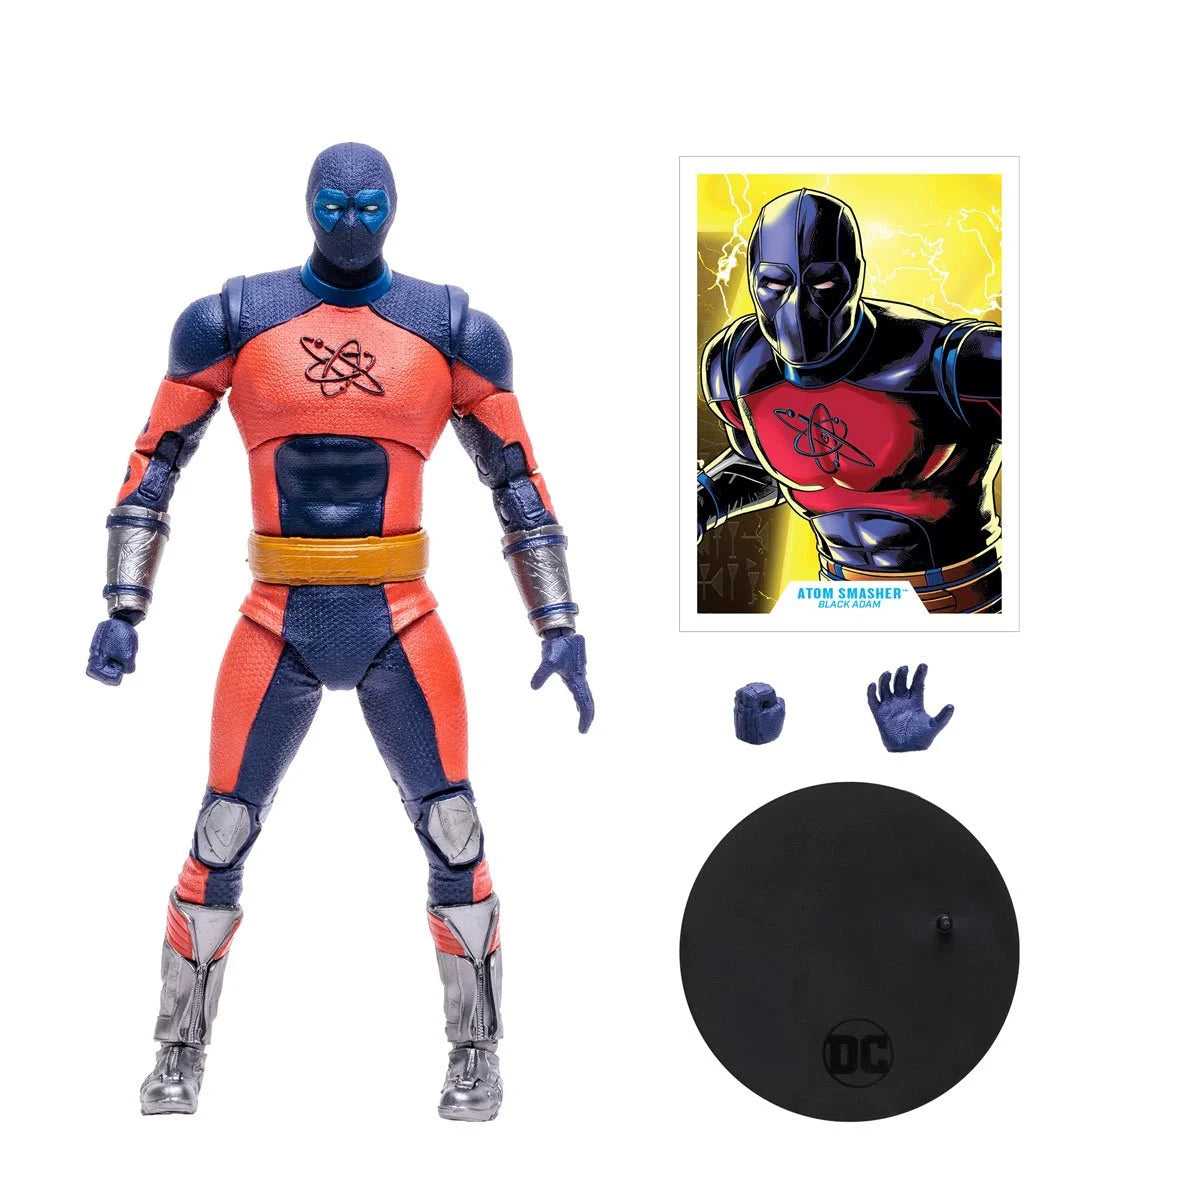 Black Adam DC Multiverse Atom Smasher Action Figure Hasbro Toys